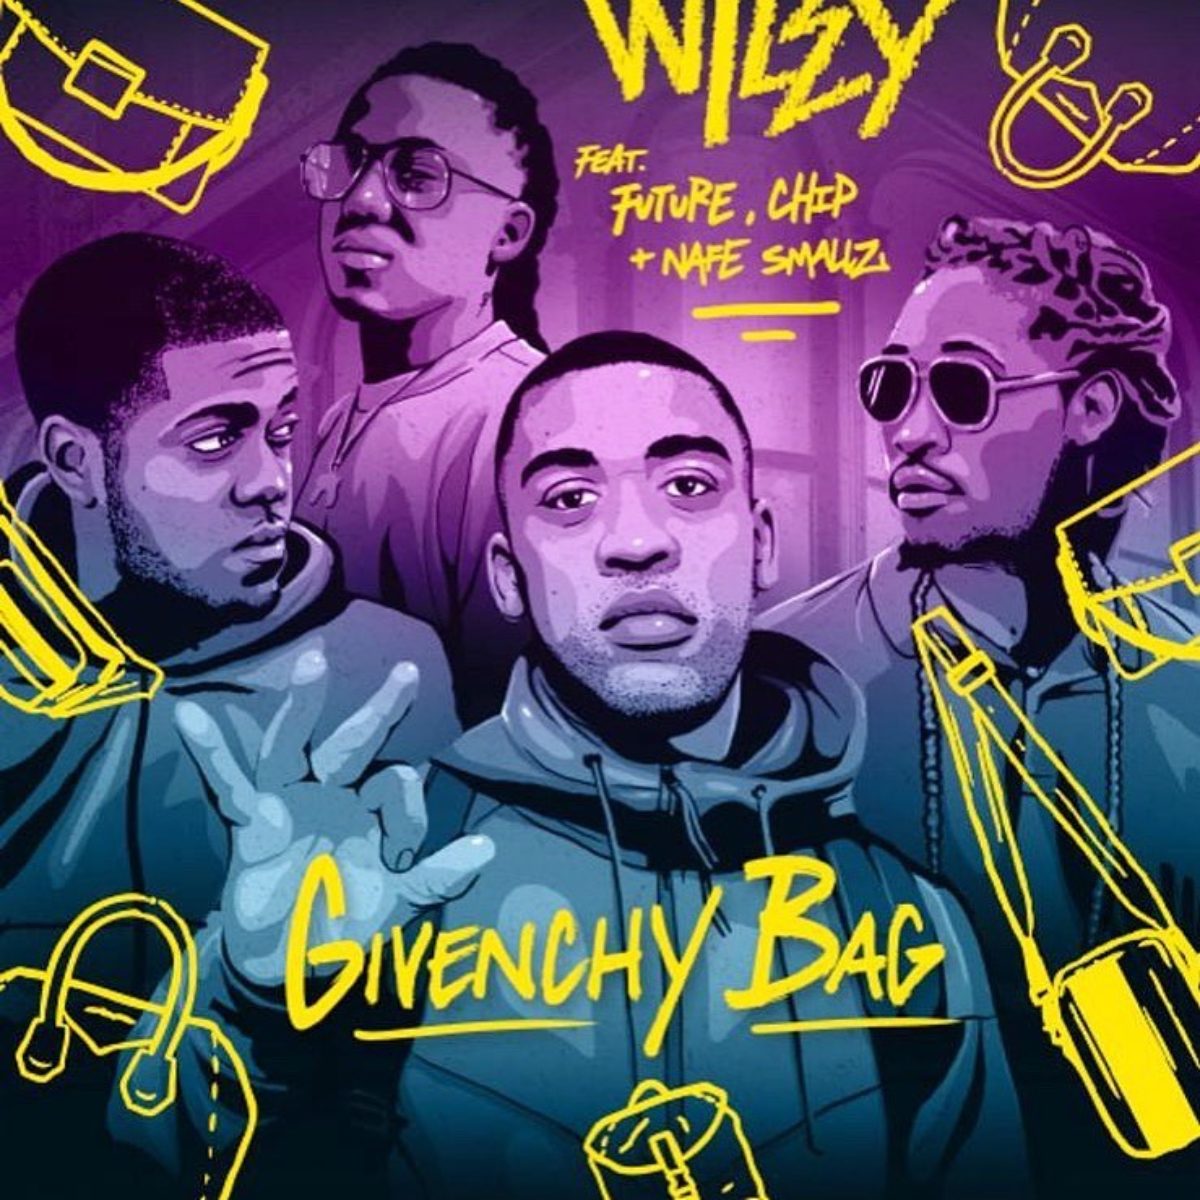 wiley givenchy bag